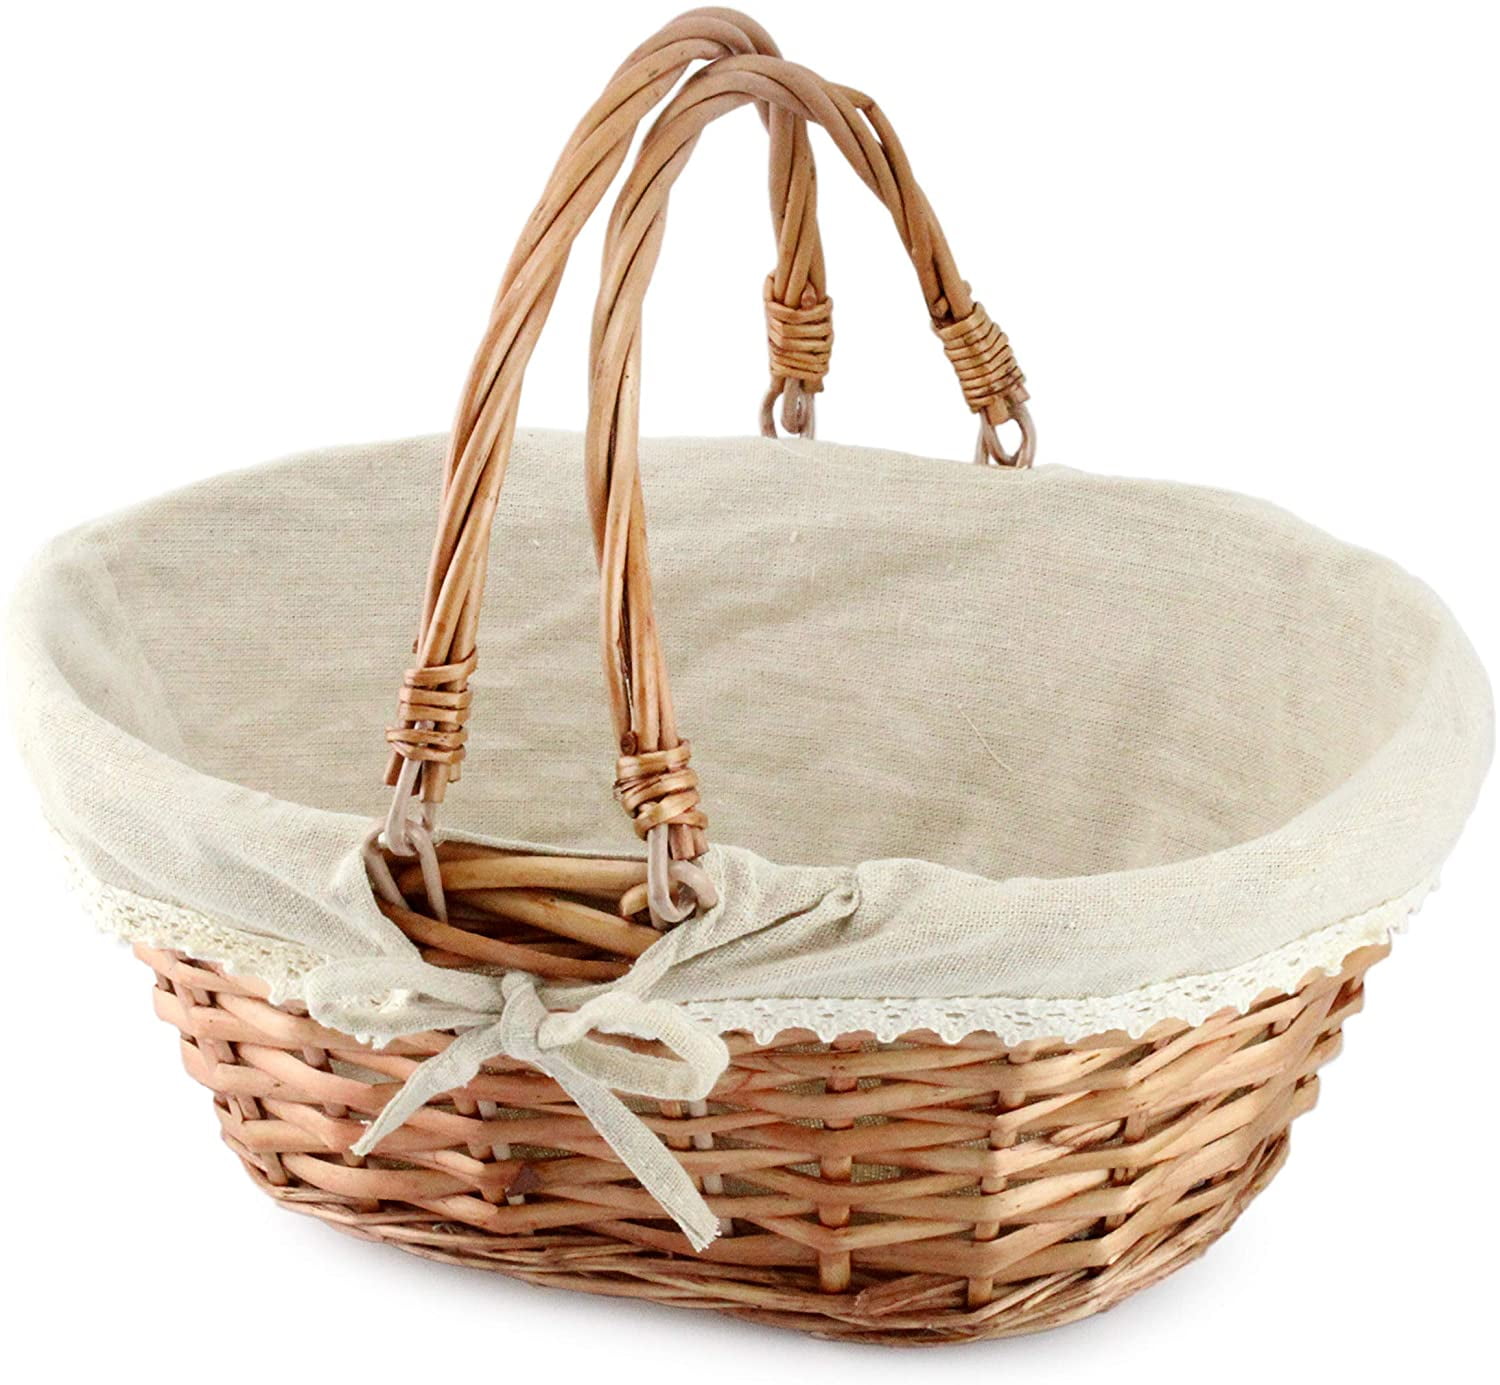 Wicker Basket with Handle Rattan Flower Gift Basket Easter Koszyczek Wielkanocny 